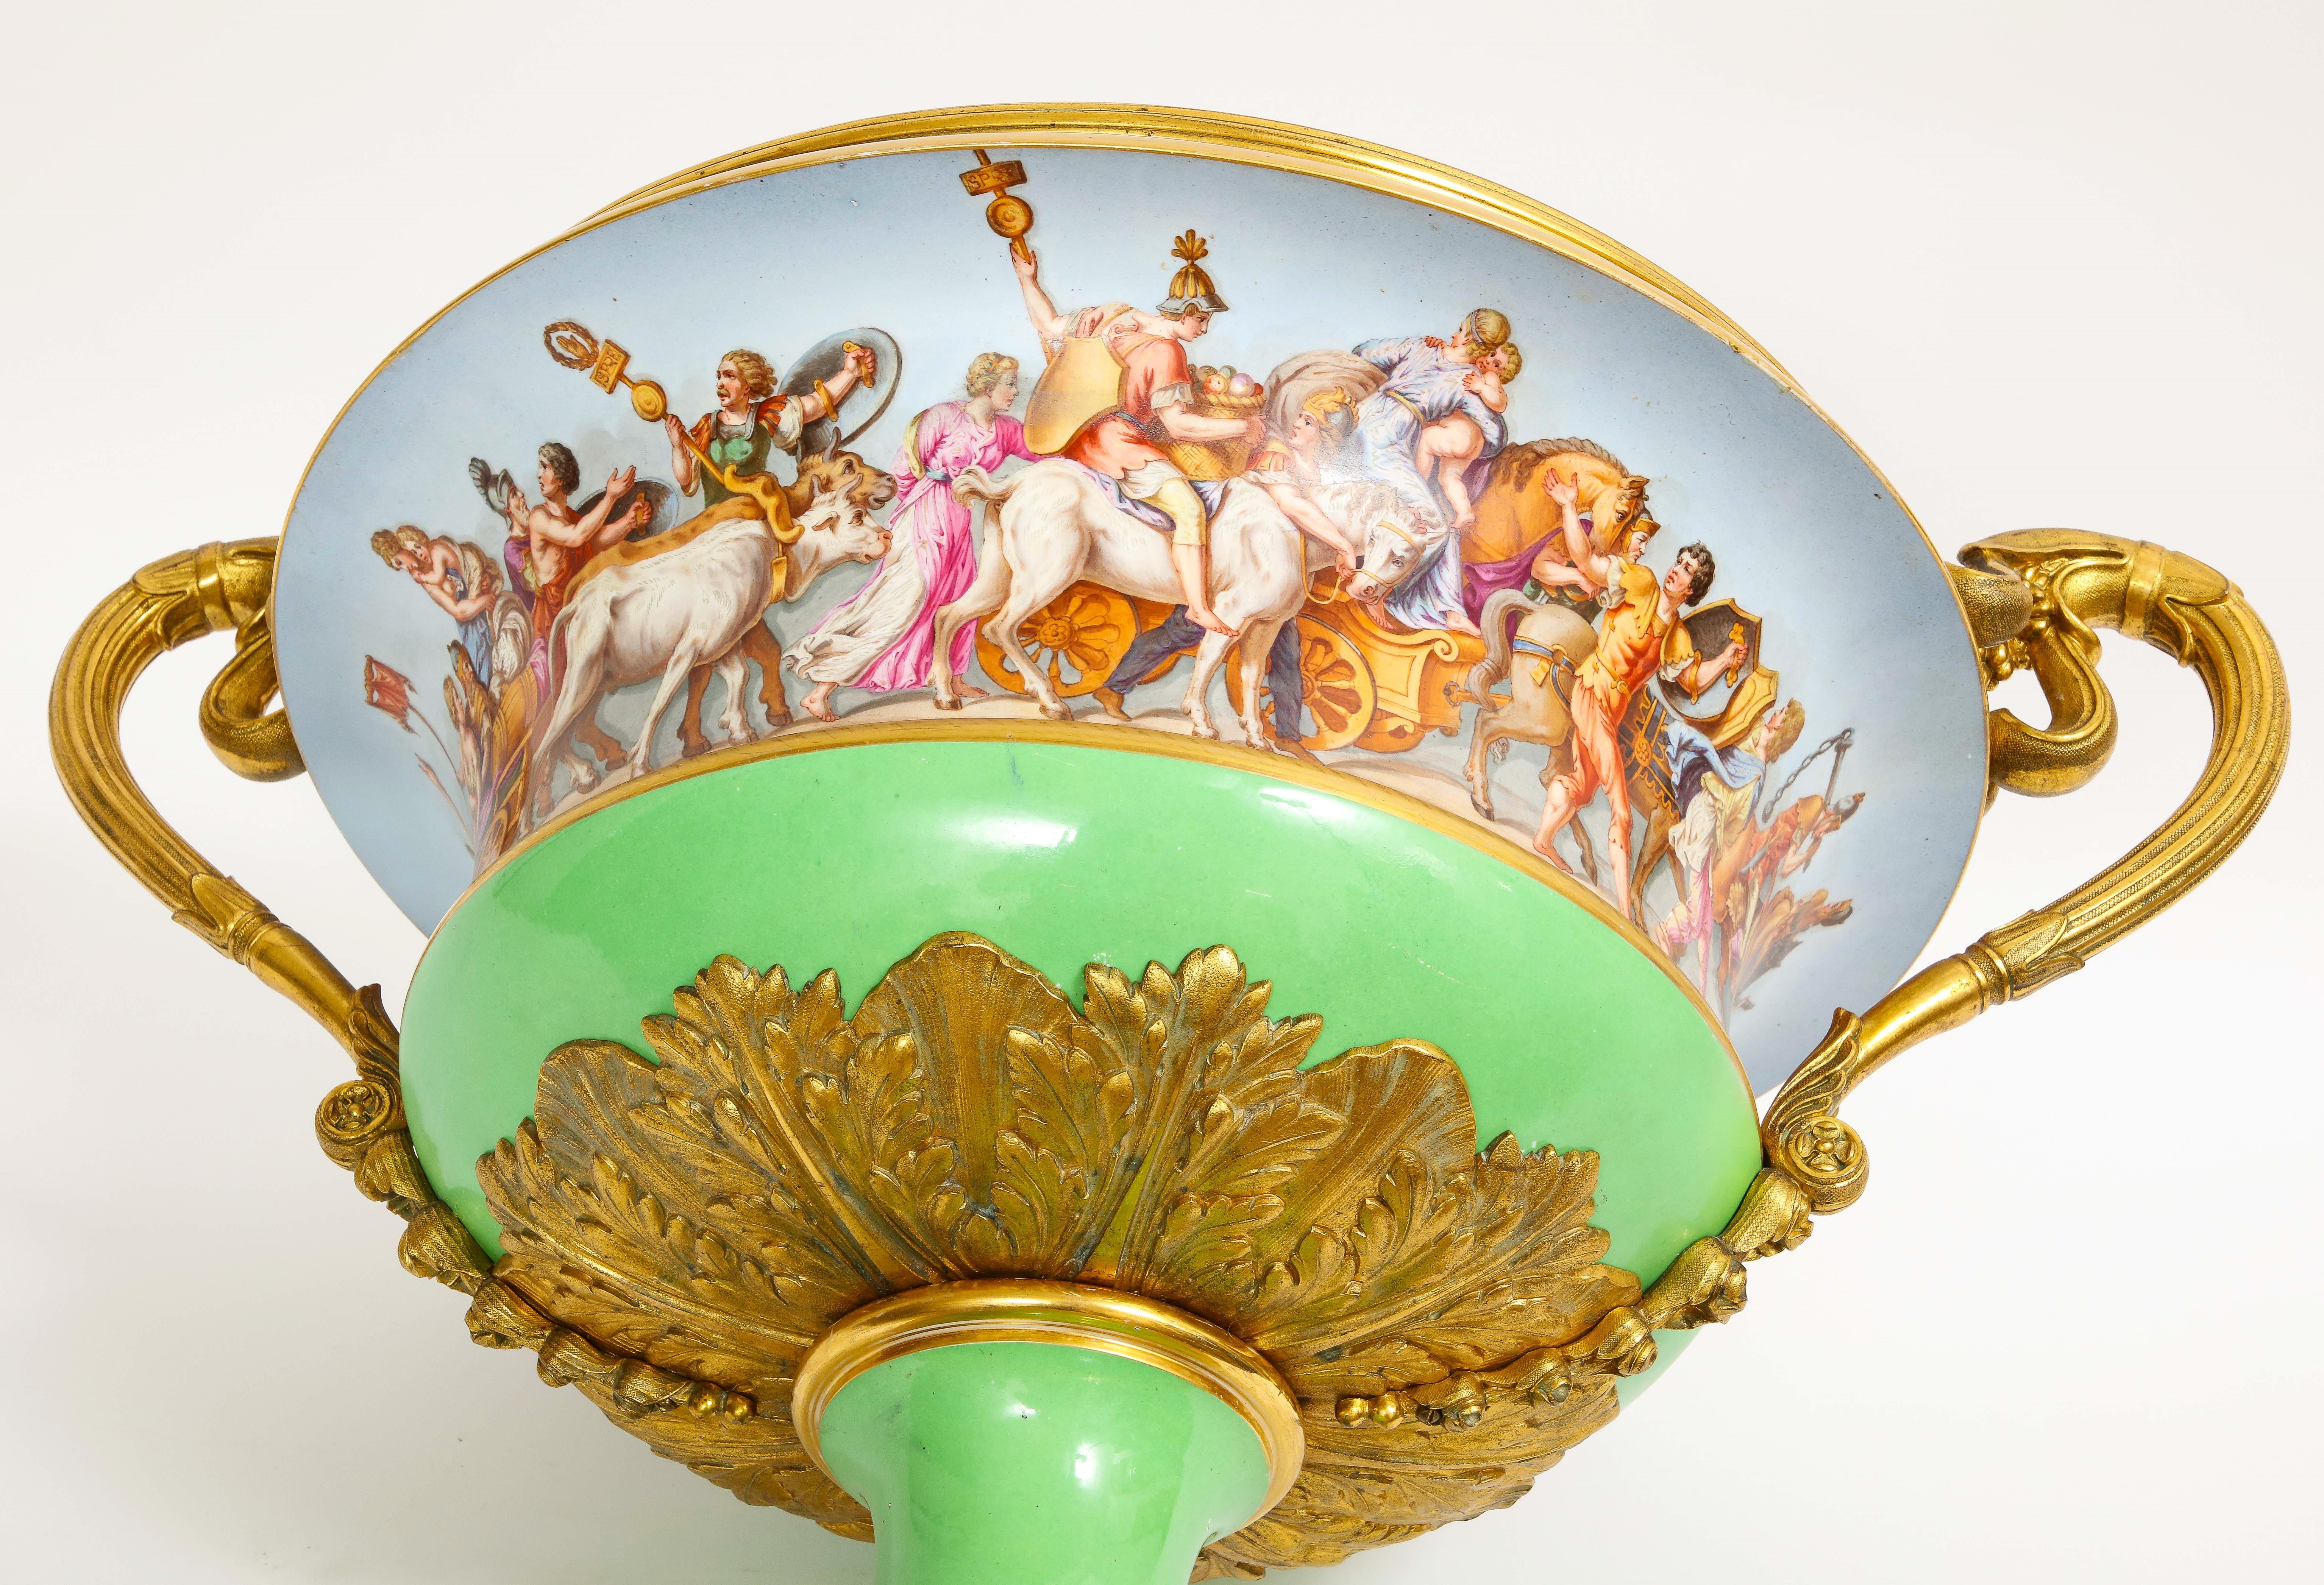 Monumental Sevres Porcelain Ormolu-Mounted 2-Handle Campana Form Centerpiece For Sale 8